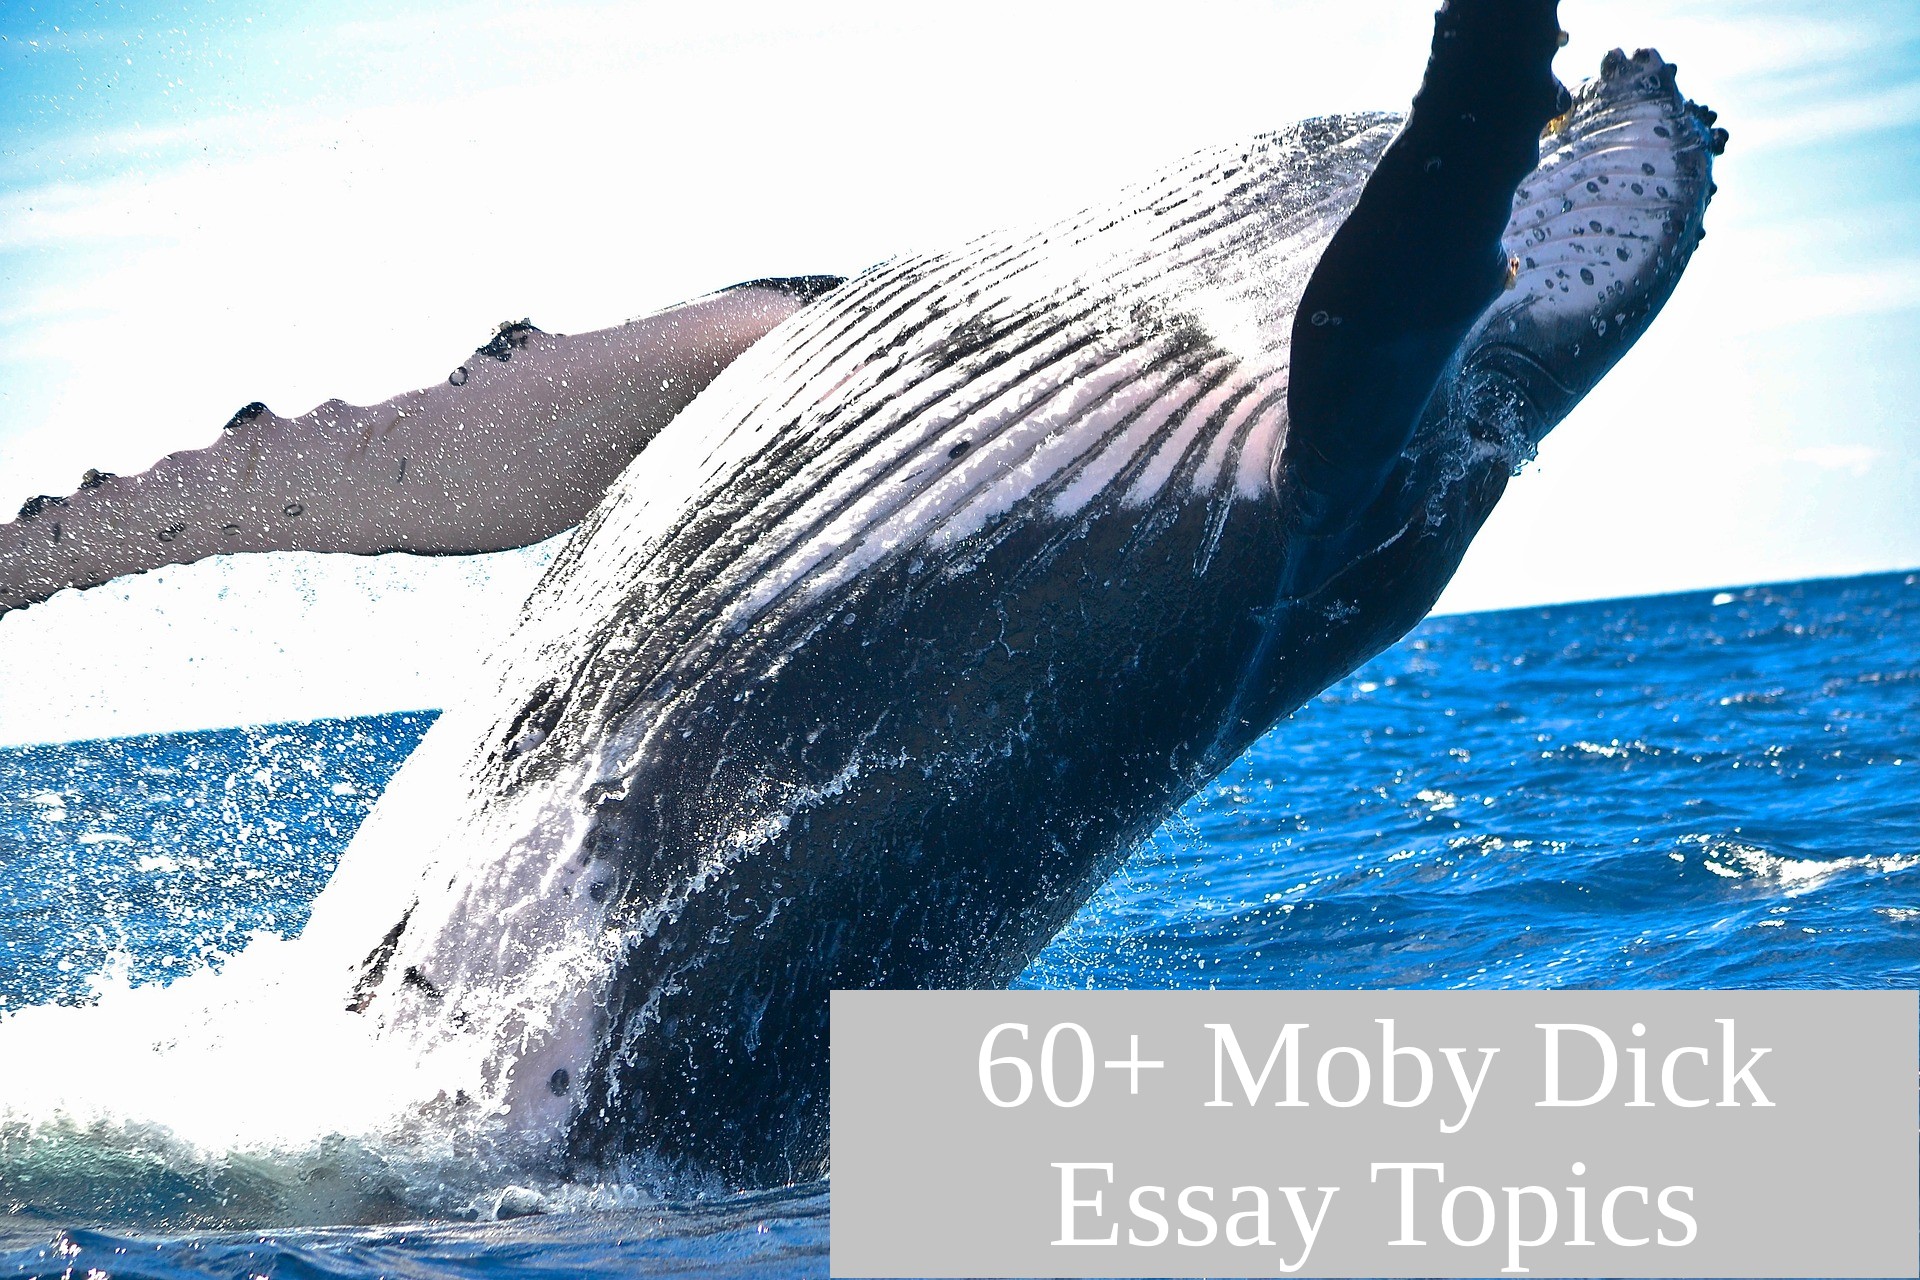 Moby Dick Essay Topics